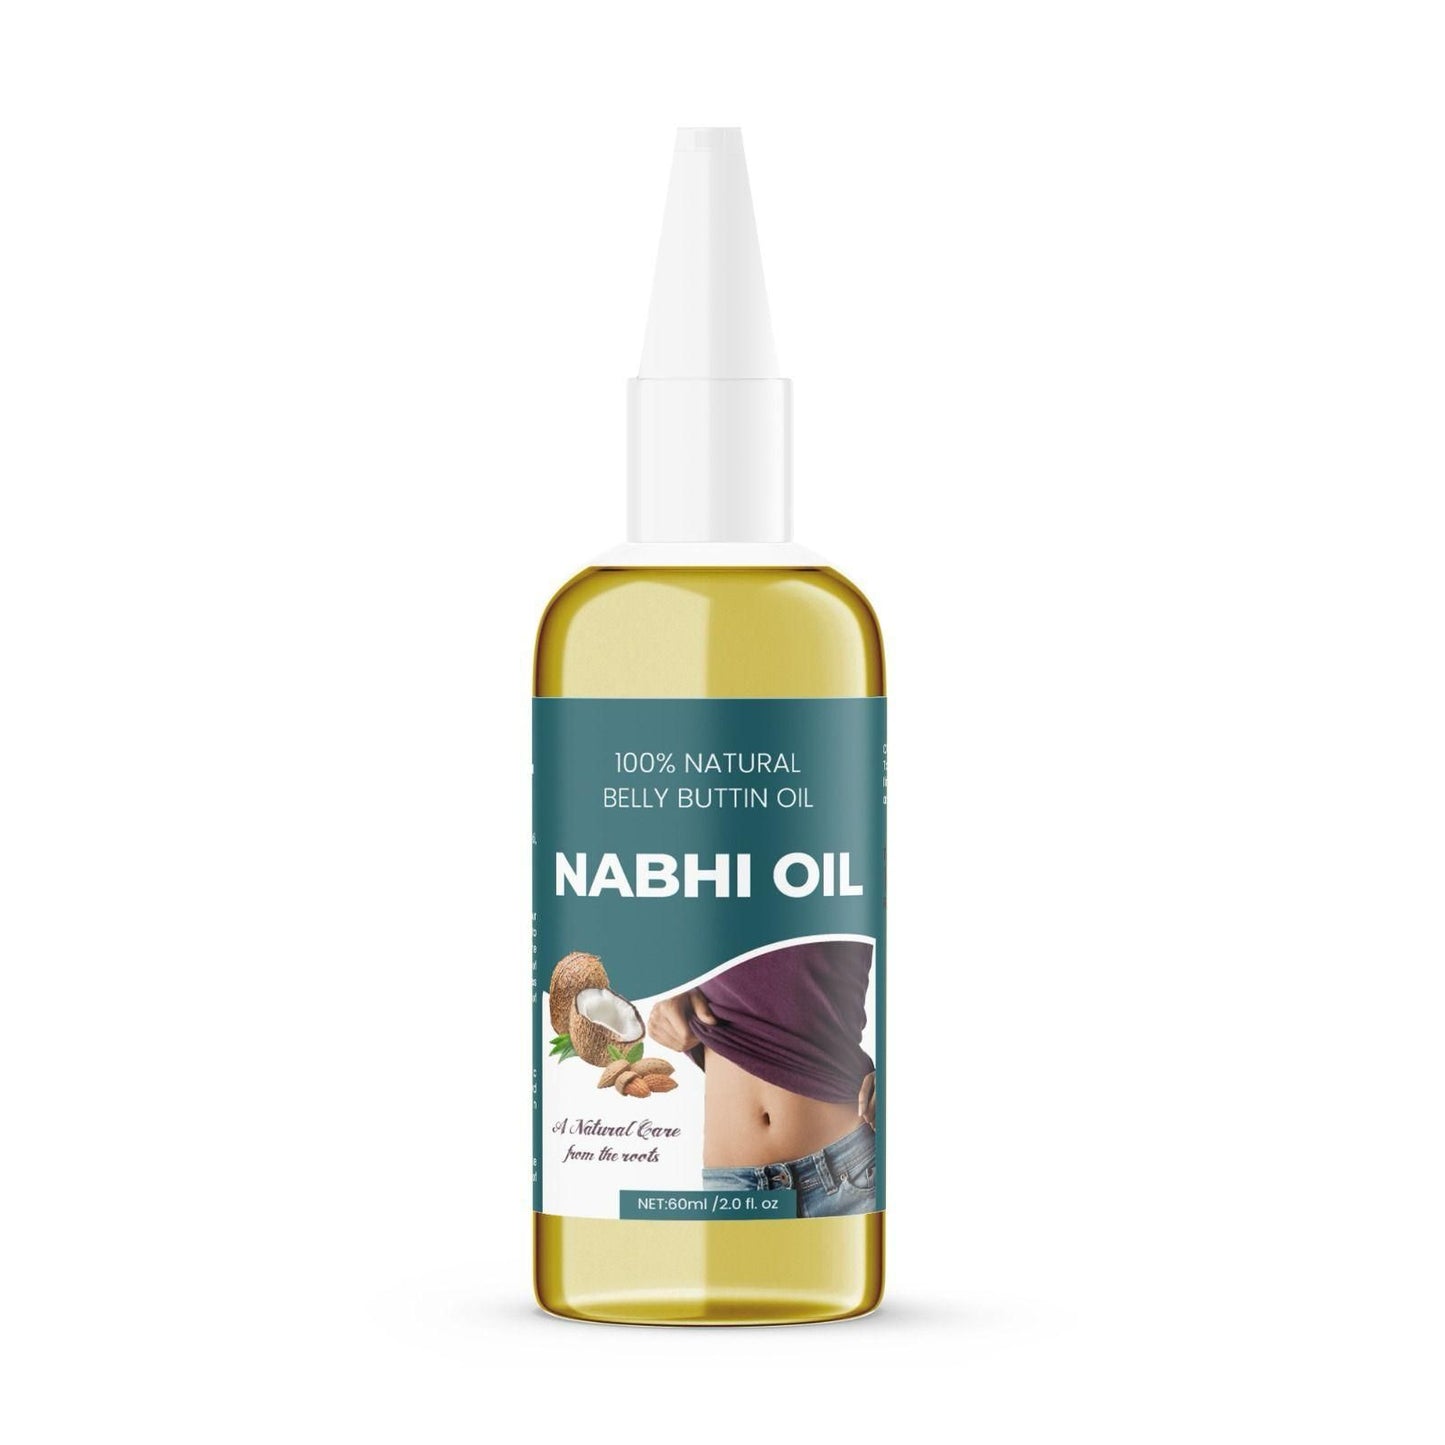 Natural Belly Buttin Oil Nabhi Oil 60ml